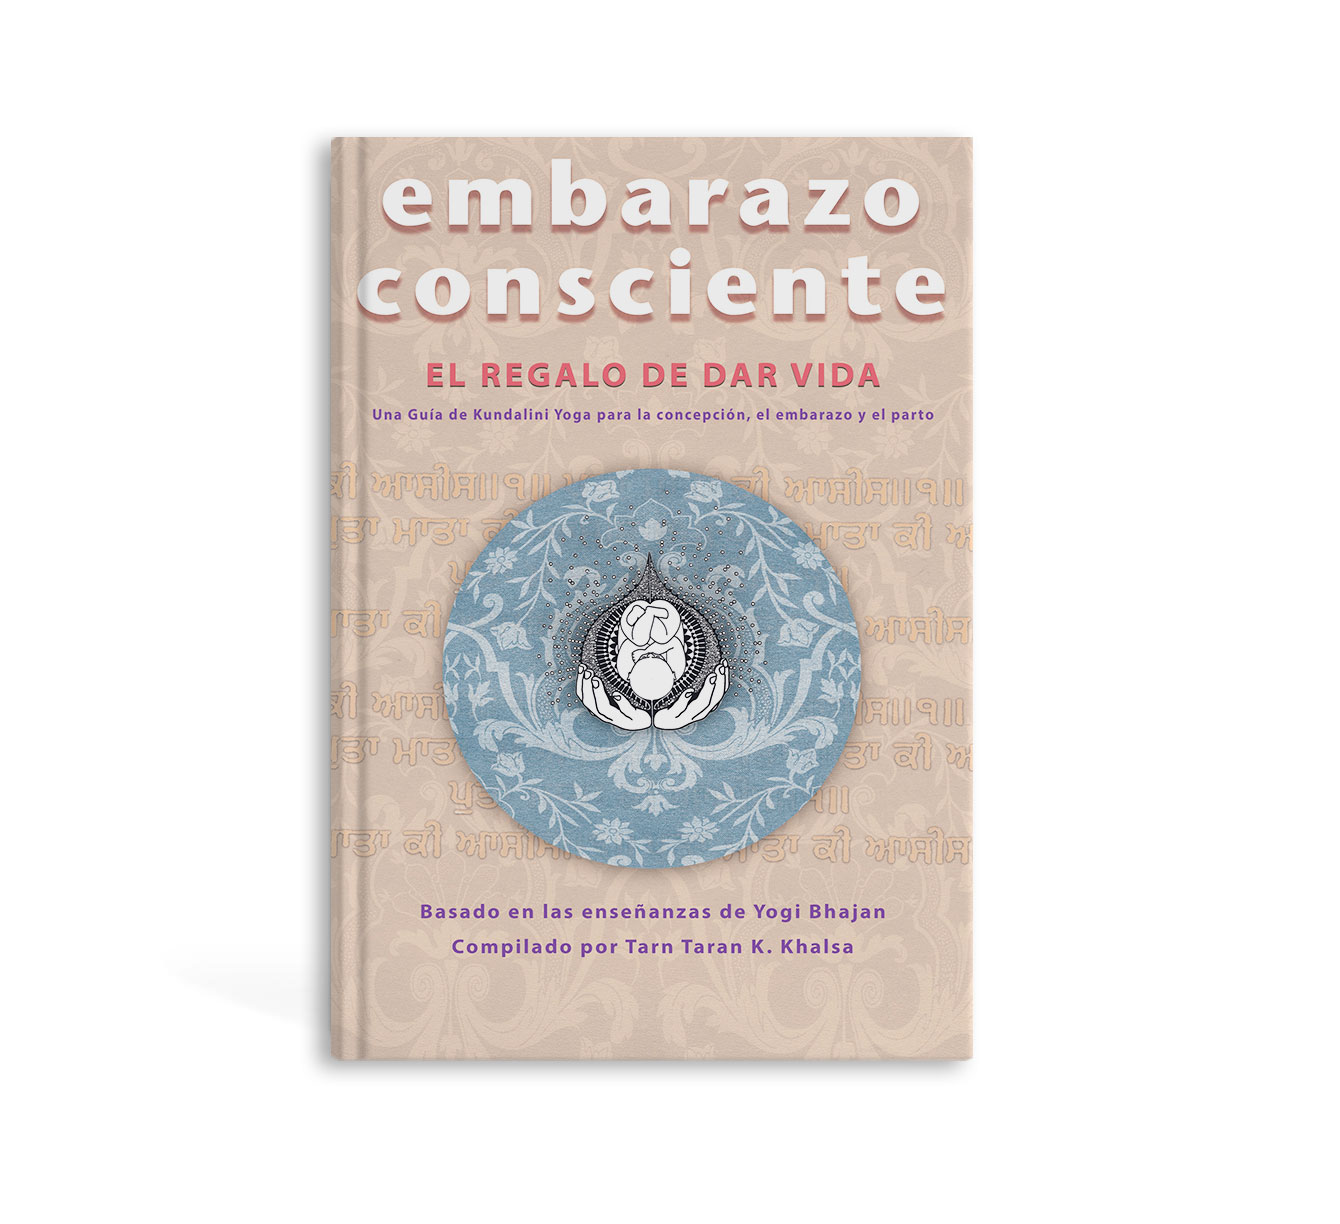 https://ramayoga.org/wp-content/uploads/2020/03/Embarazo-Consciente_libro.jpg